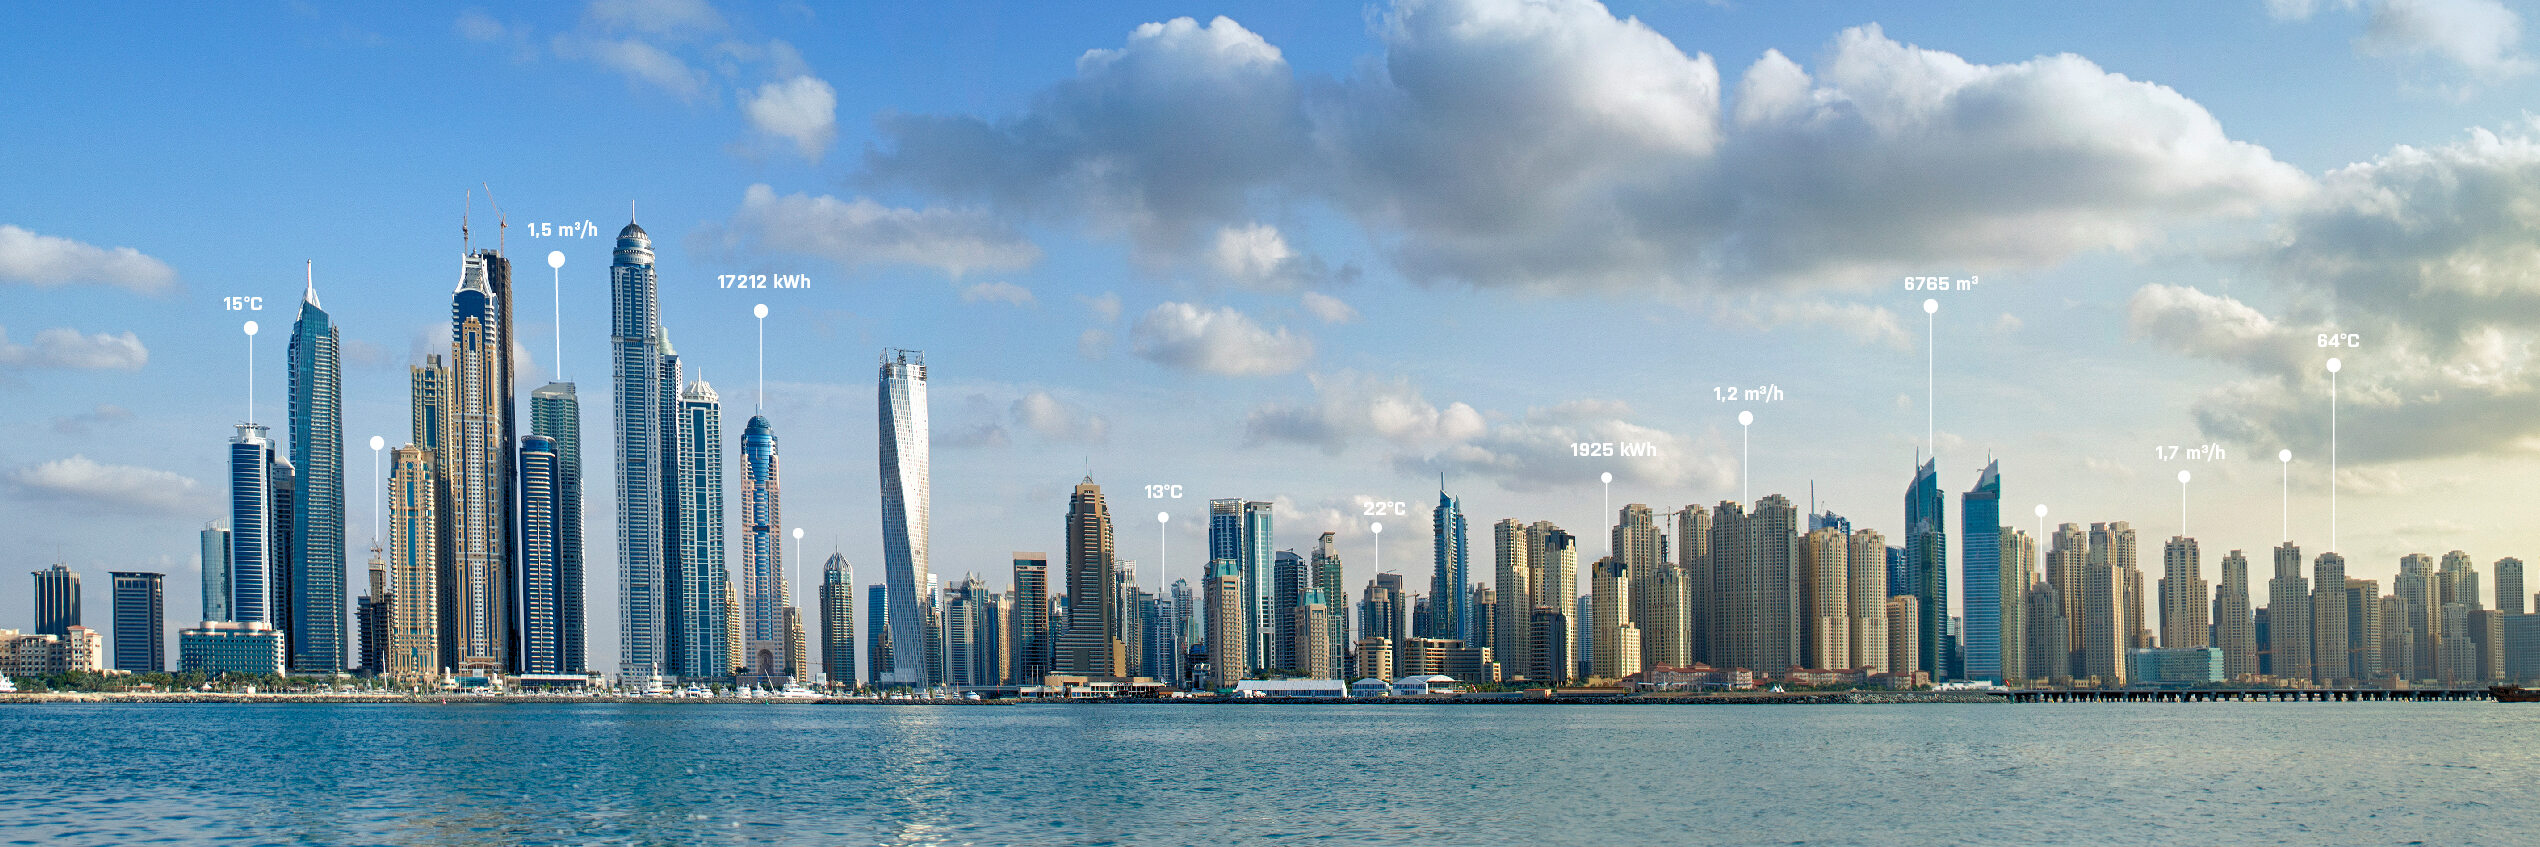 Dubai: vores ekspanderende regionale knudepunkt